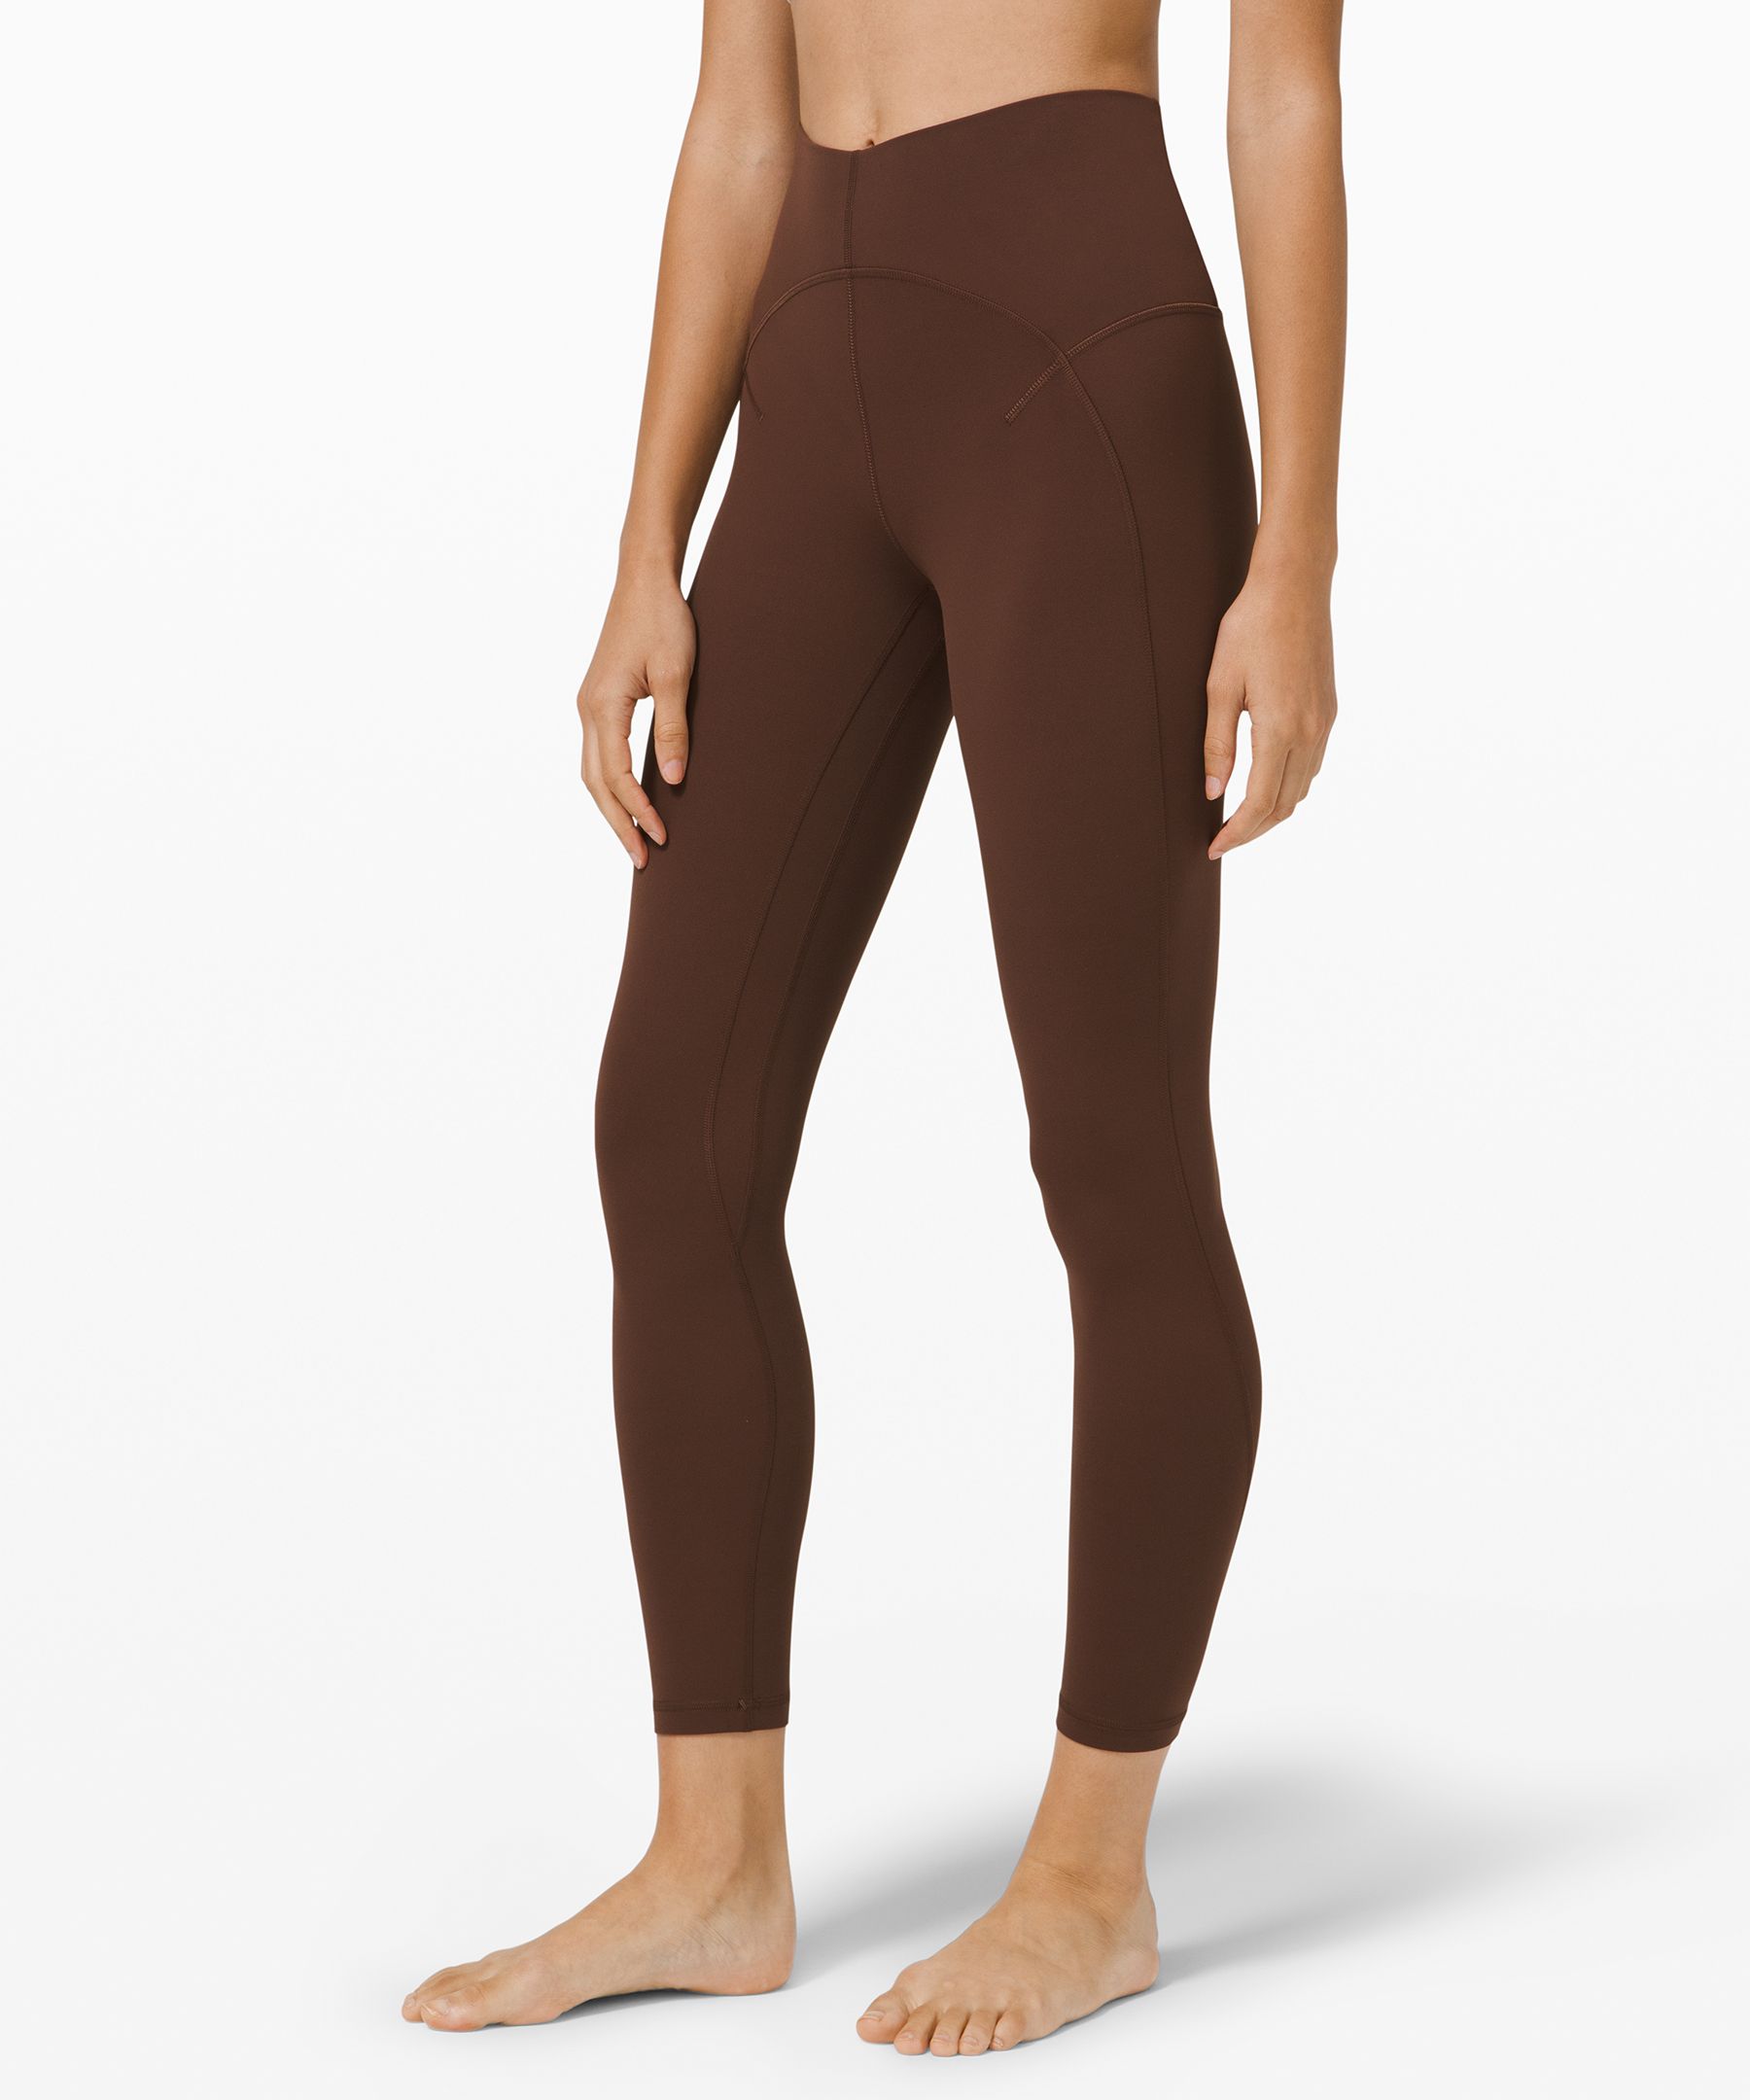 lululemon leggings: Shop activewear for men and women this fall